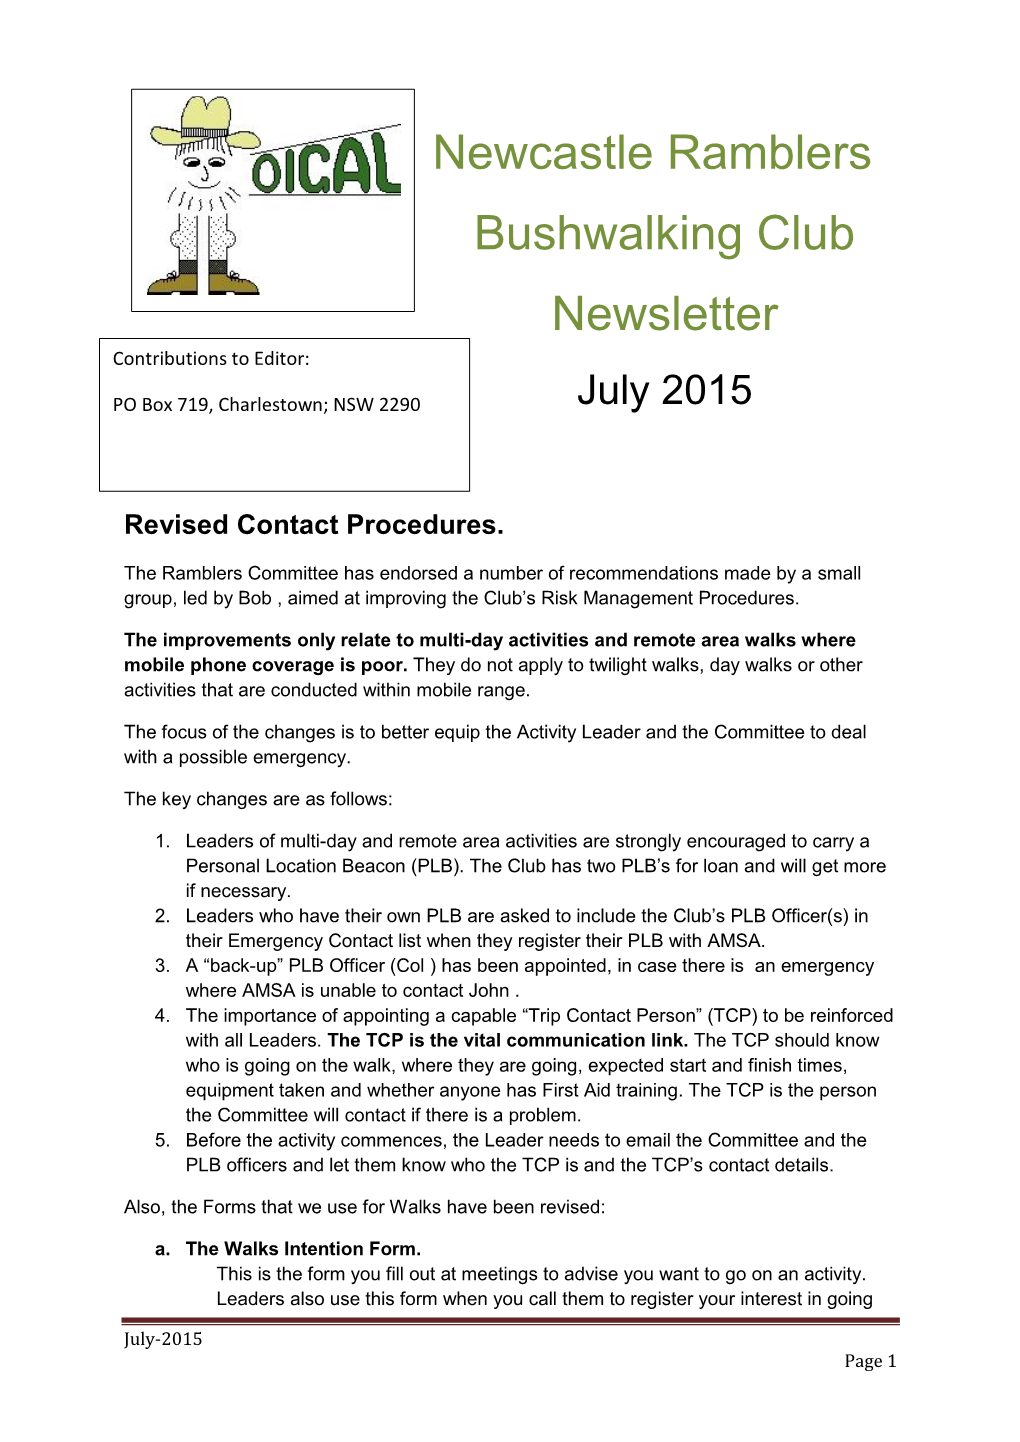 Newcastle Ramblers Bushwalking Club Newsletter